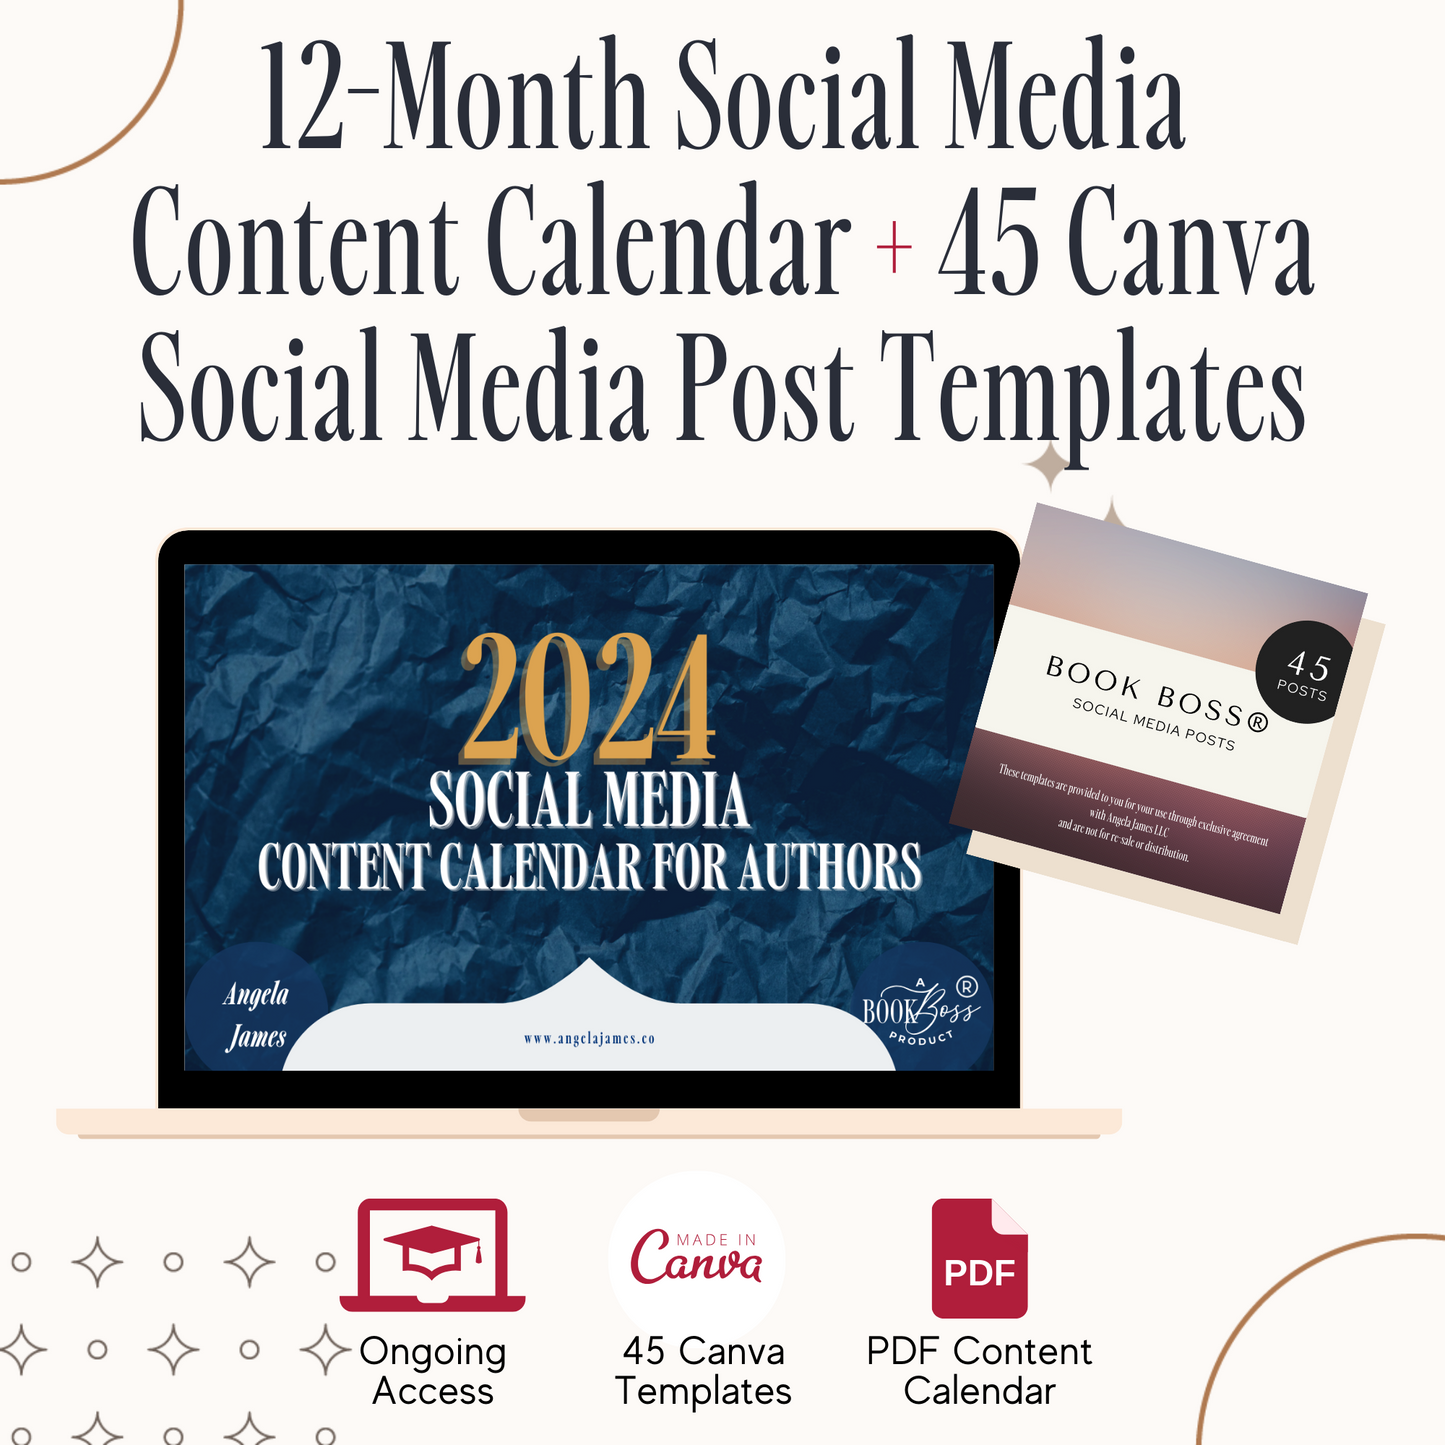 12-Month Social Media Content Calendar for Authors PLUS 45 Canva Social Media Post Templates